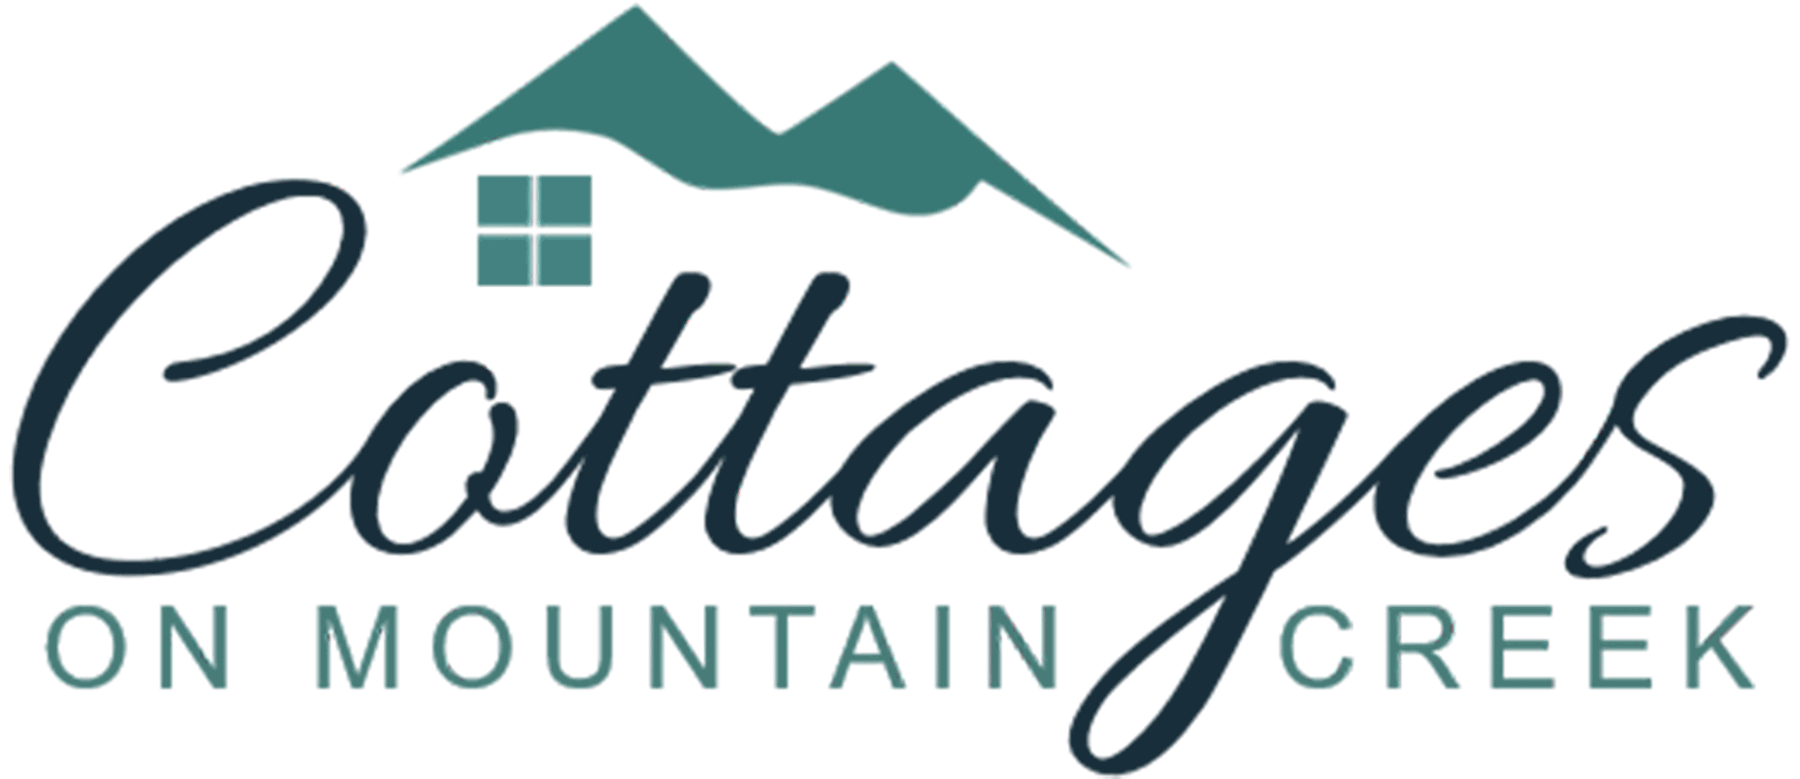 Mountain Creek Logo - cottages mountain creek logo - Reporter Newspapers